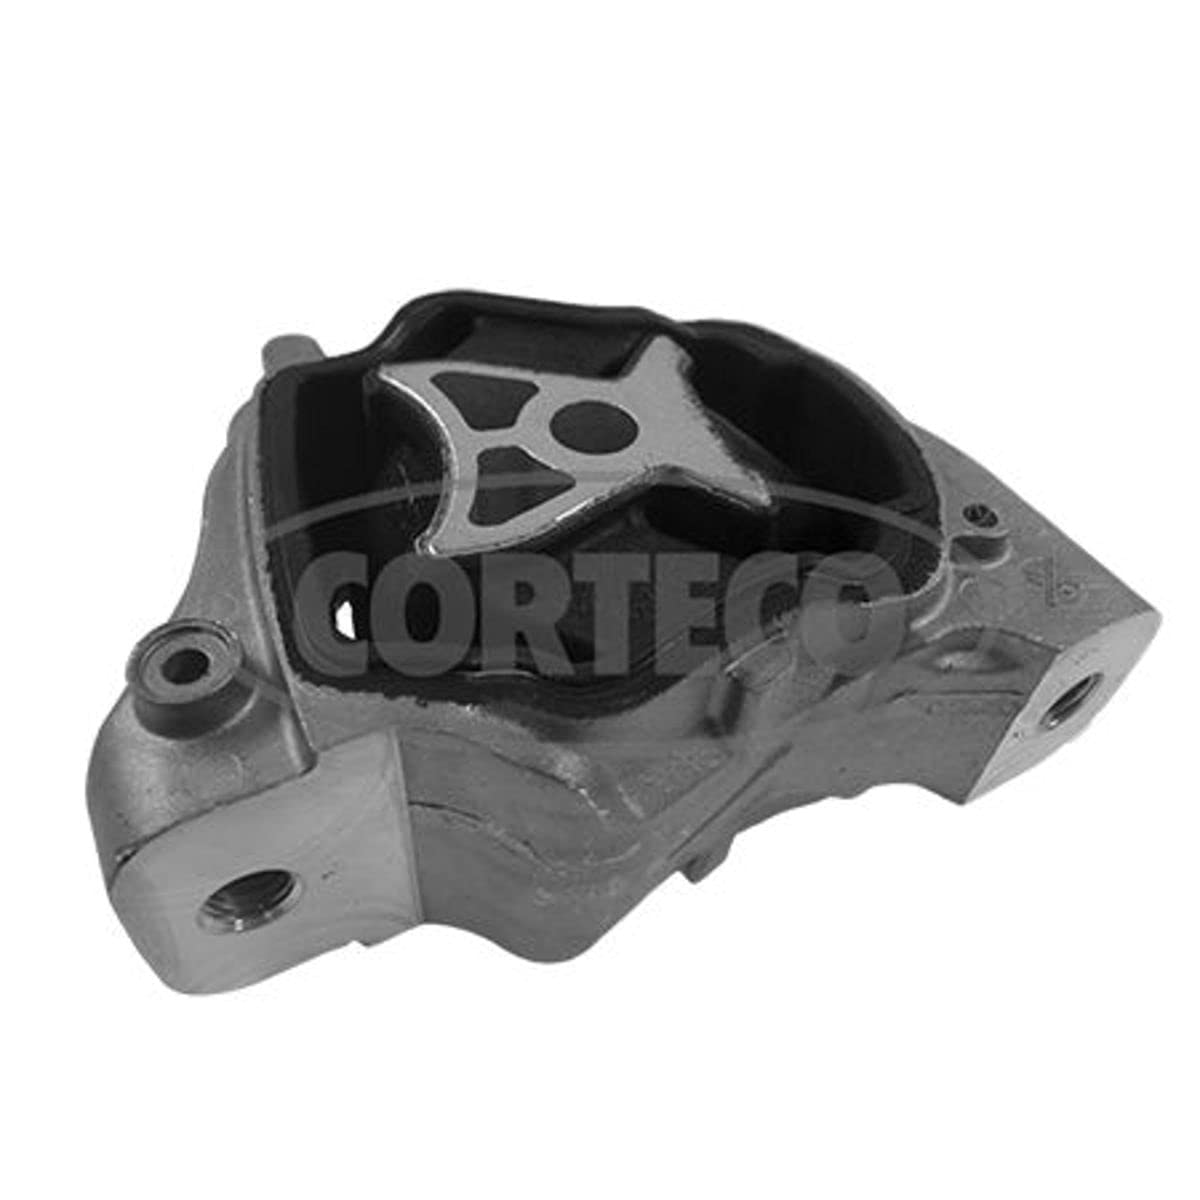 Corteco 49389712 Block Motor von Corteco